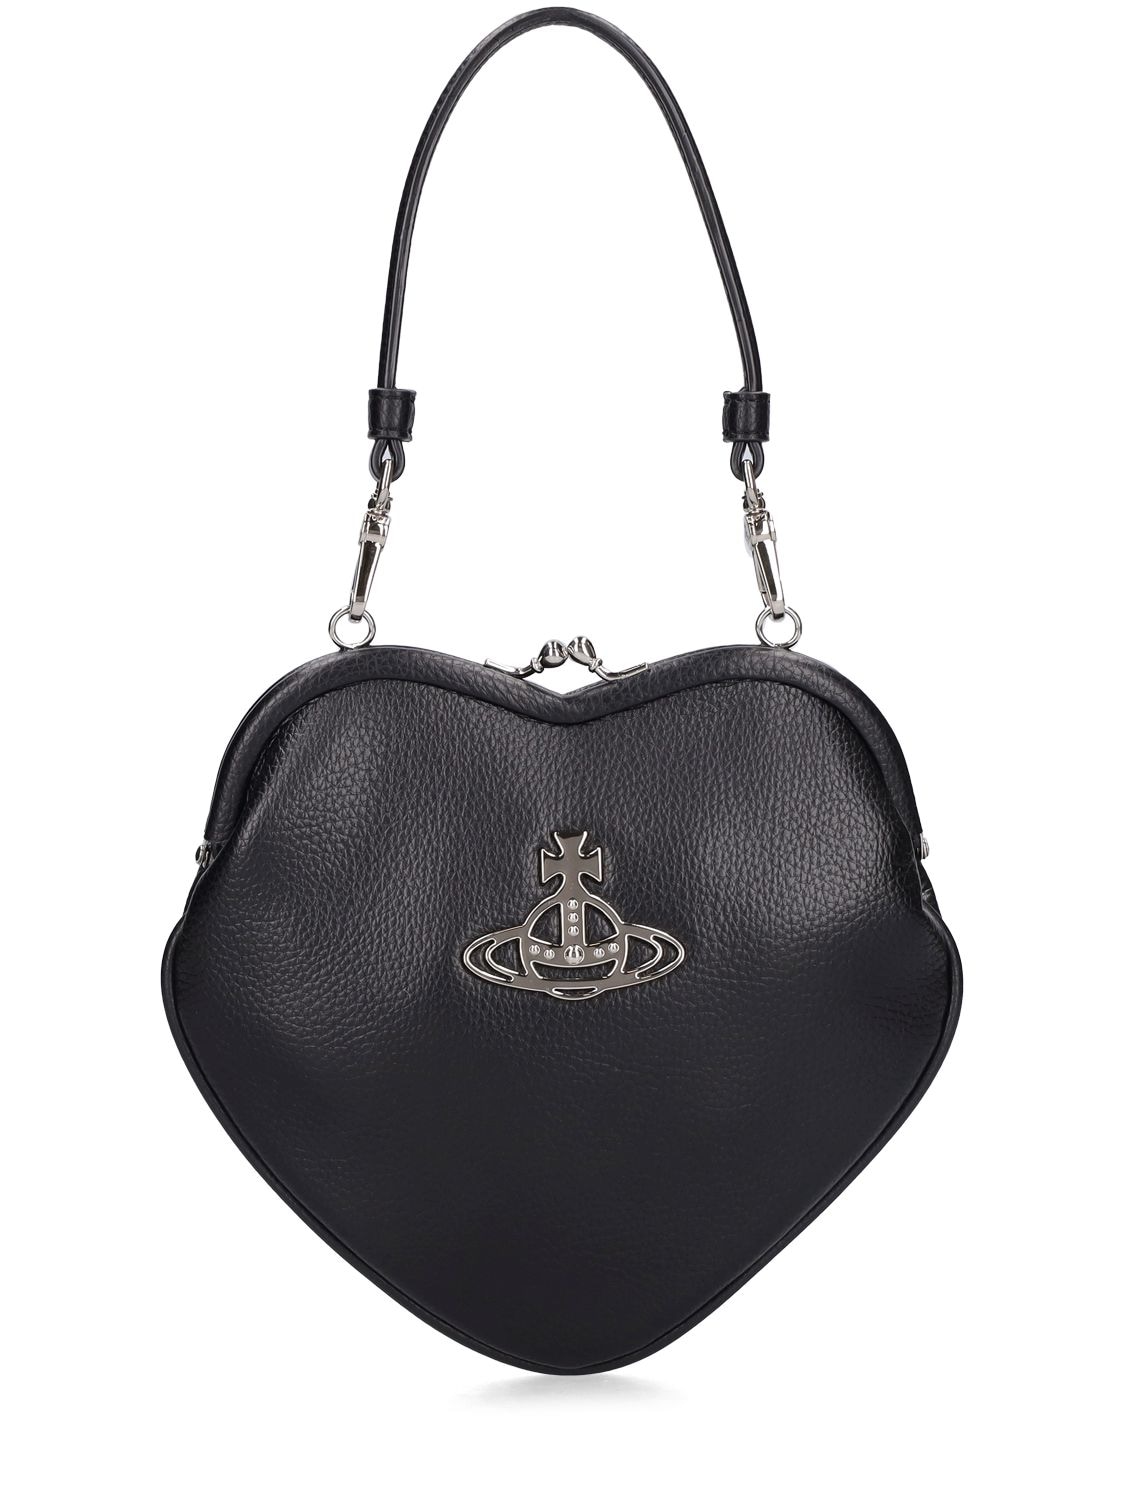 Image of Belle Heart Faux Leather Frame Bag